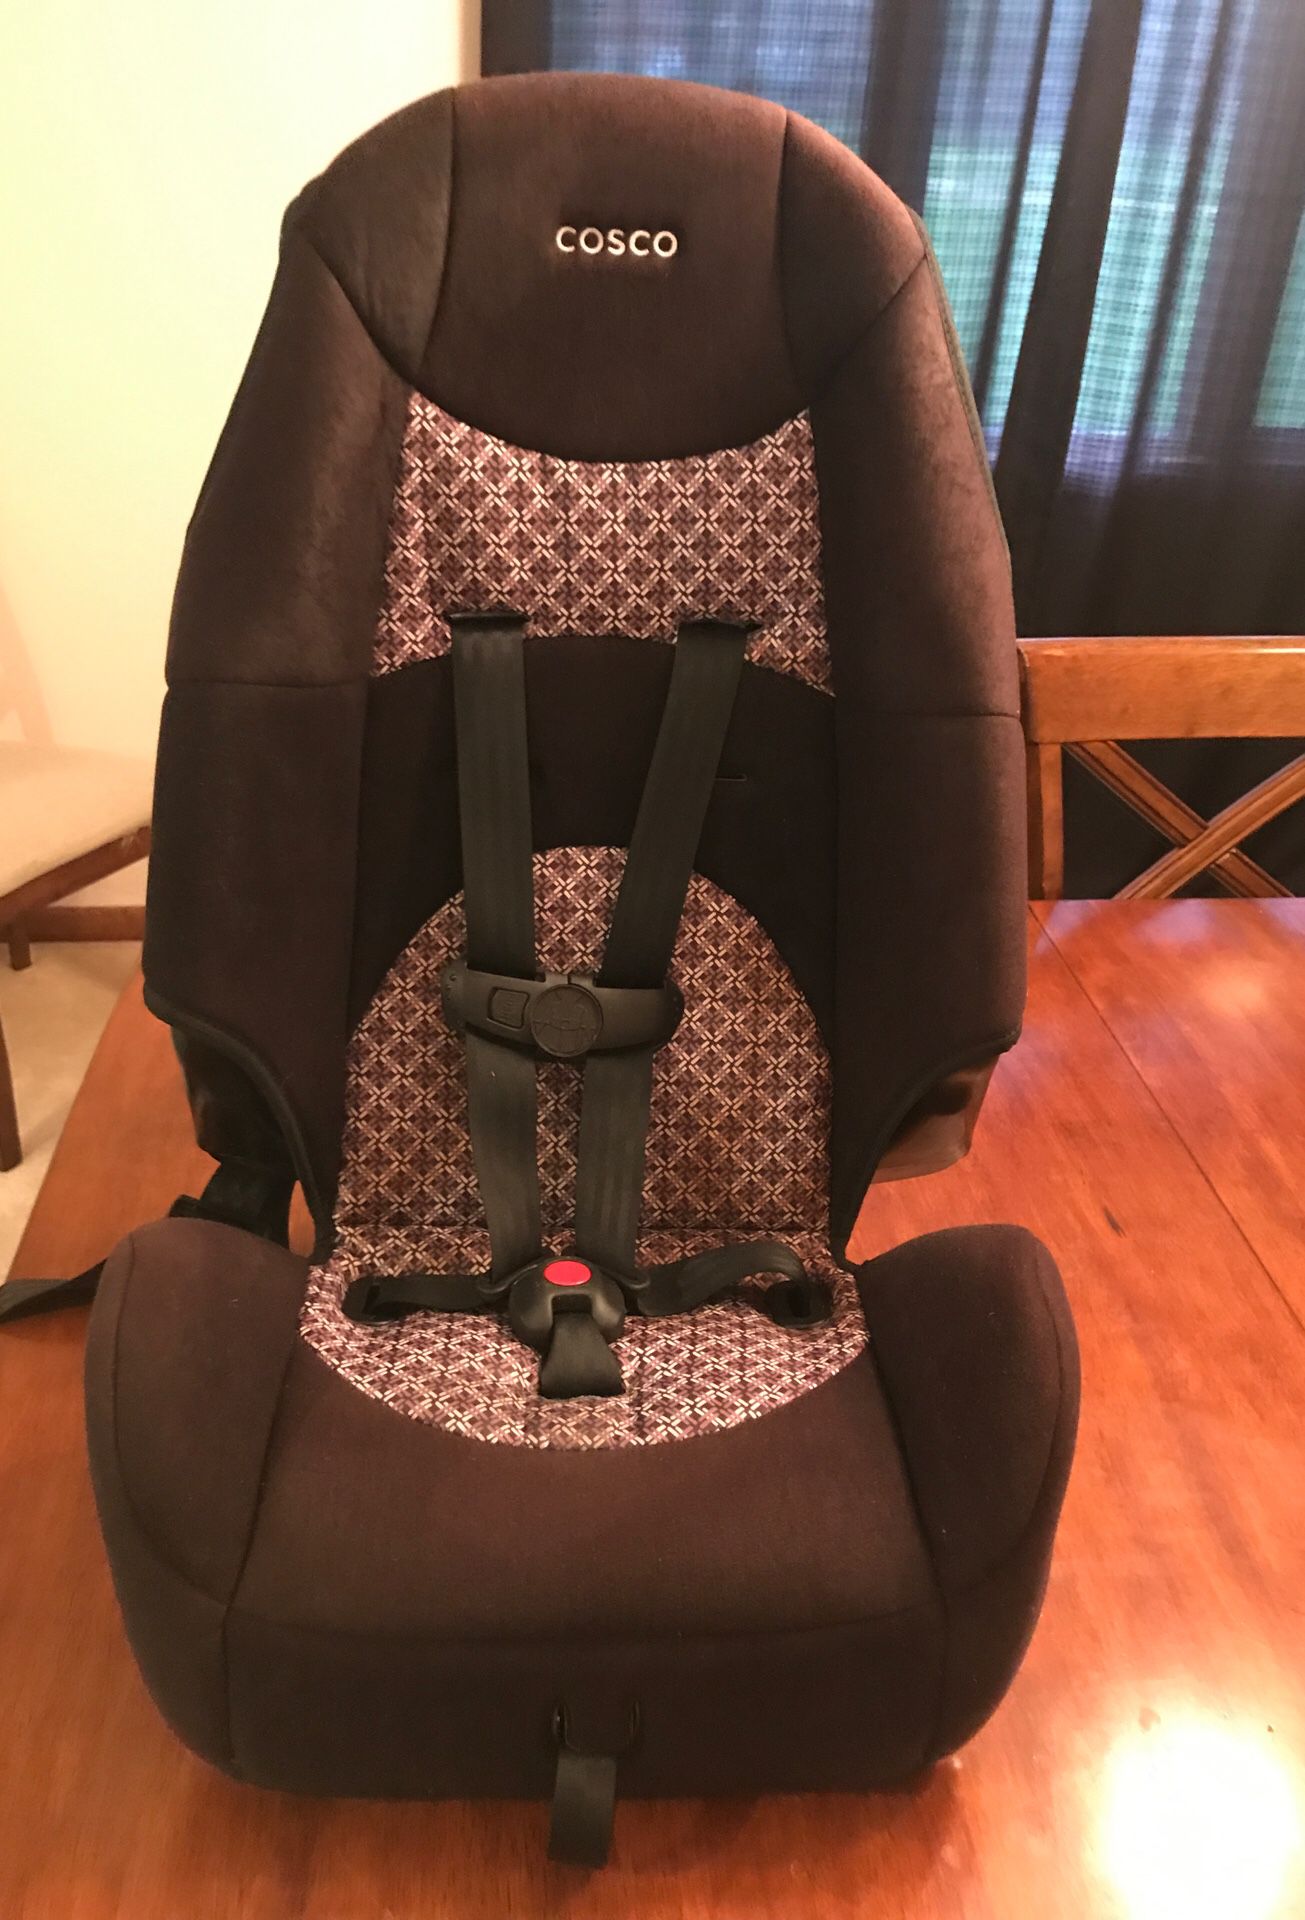 Cosco child car seat